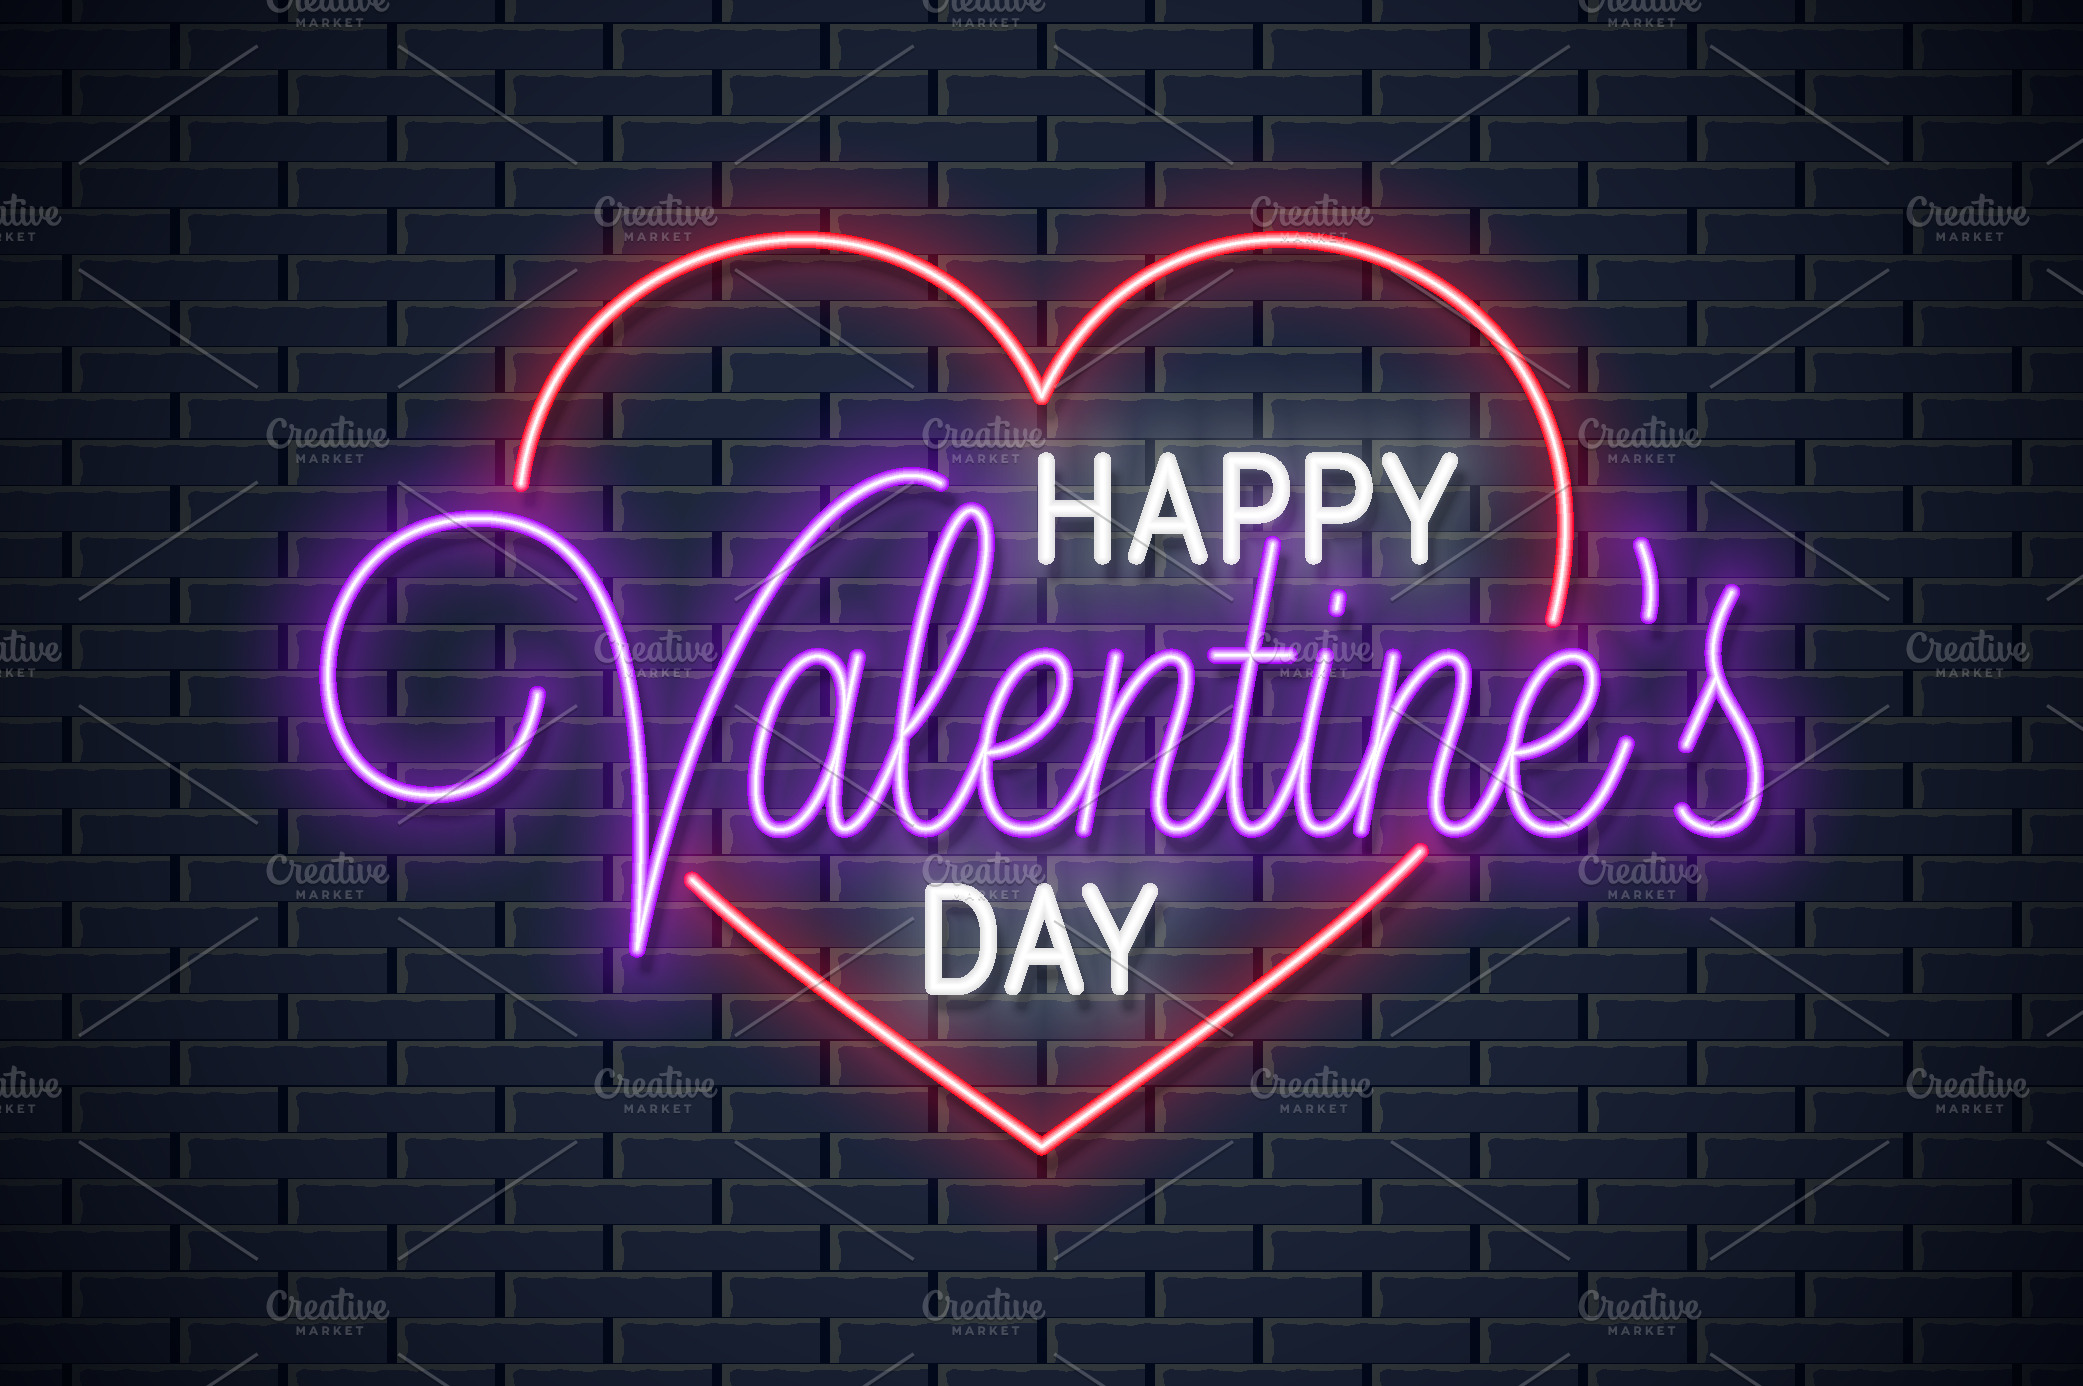 valentines-day-neon-sign-creative-card-templates-creative-market